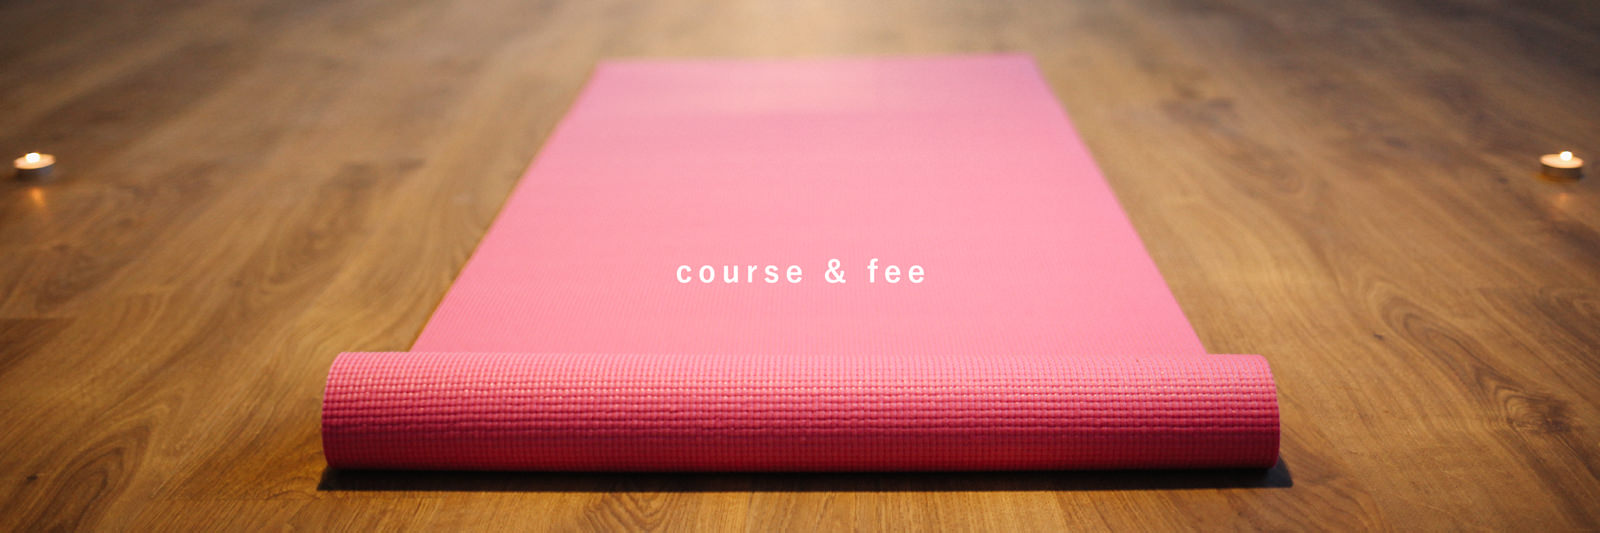 course_fee